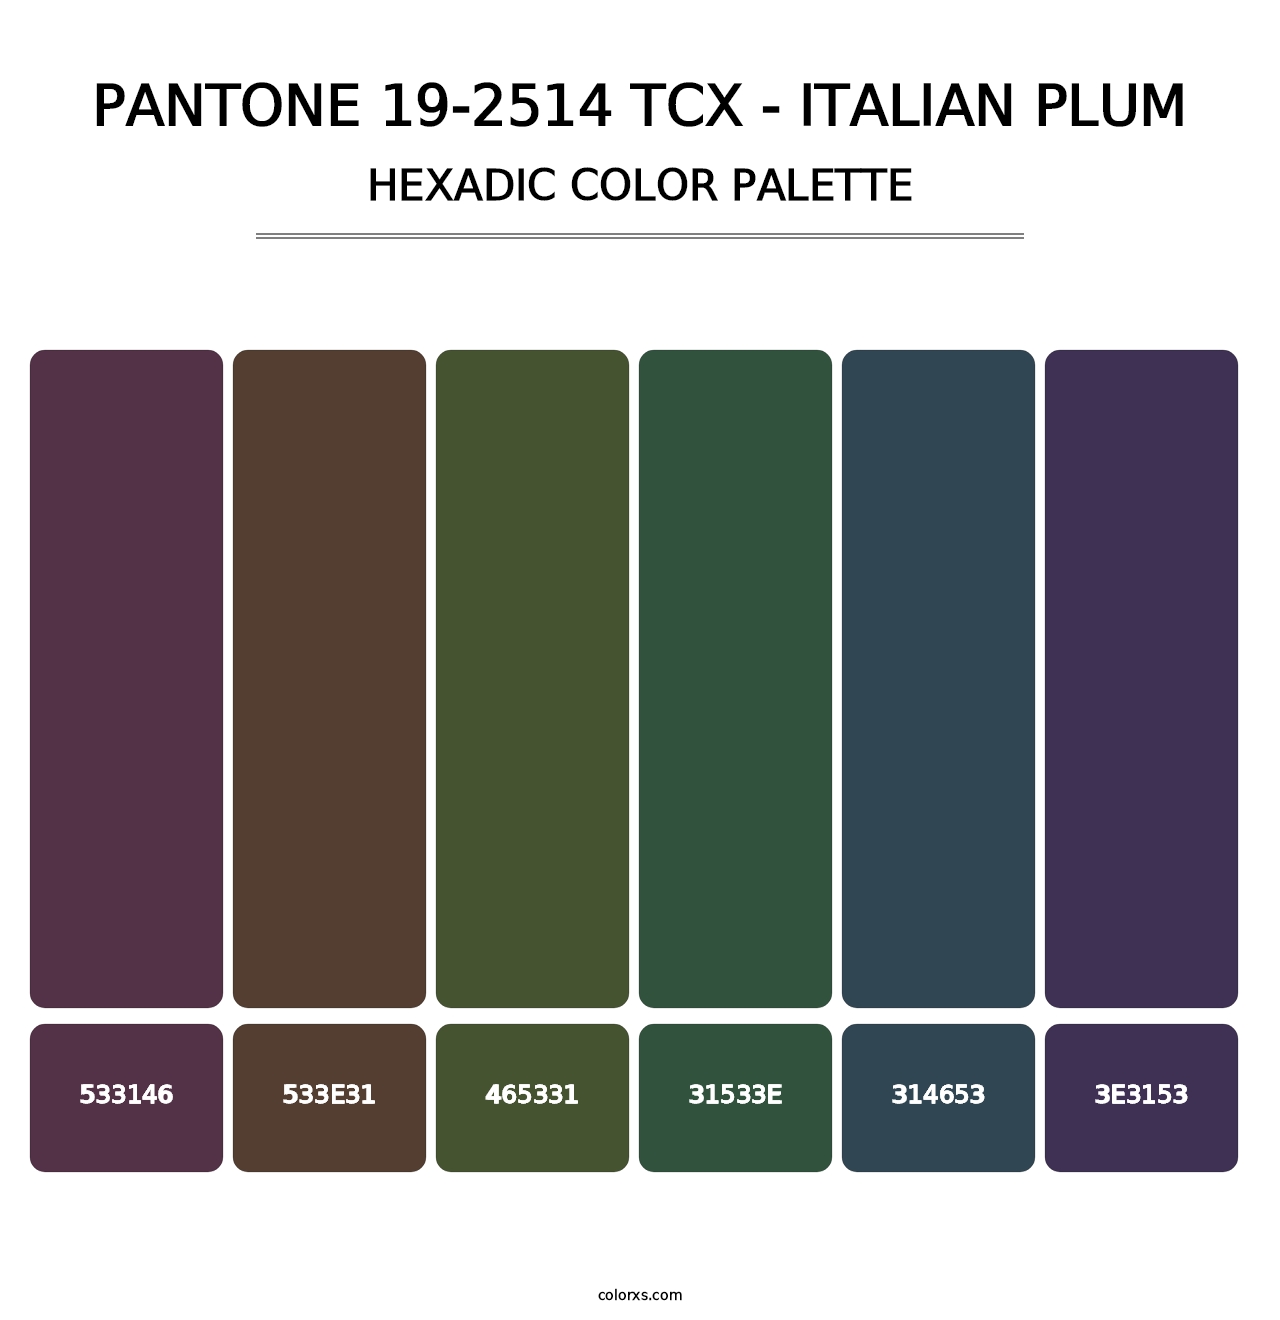 PANTONE 19-2514 TCX - Italian Plum - Hexadic Color Palette